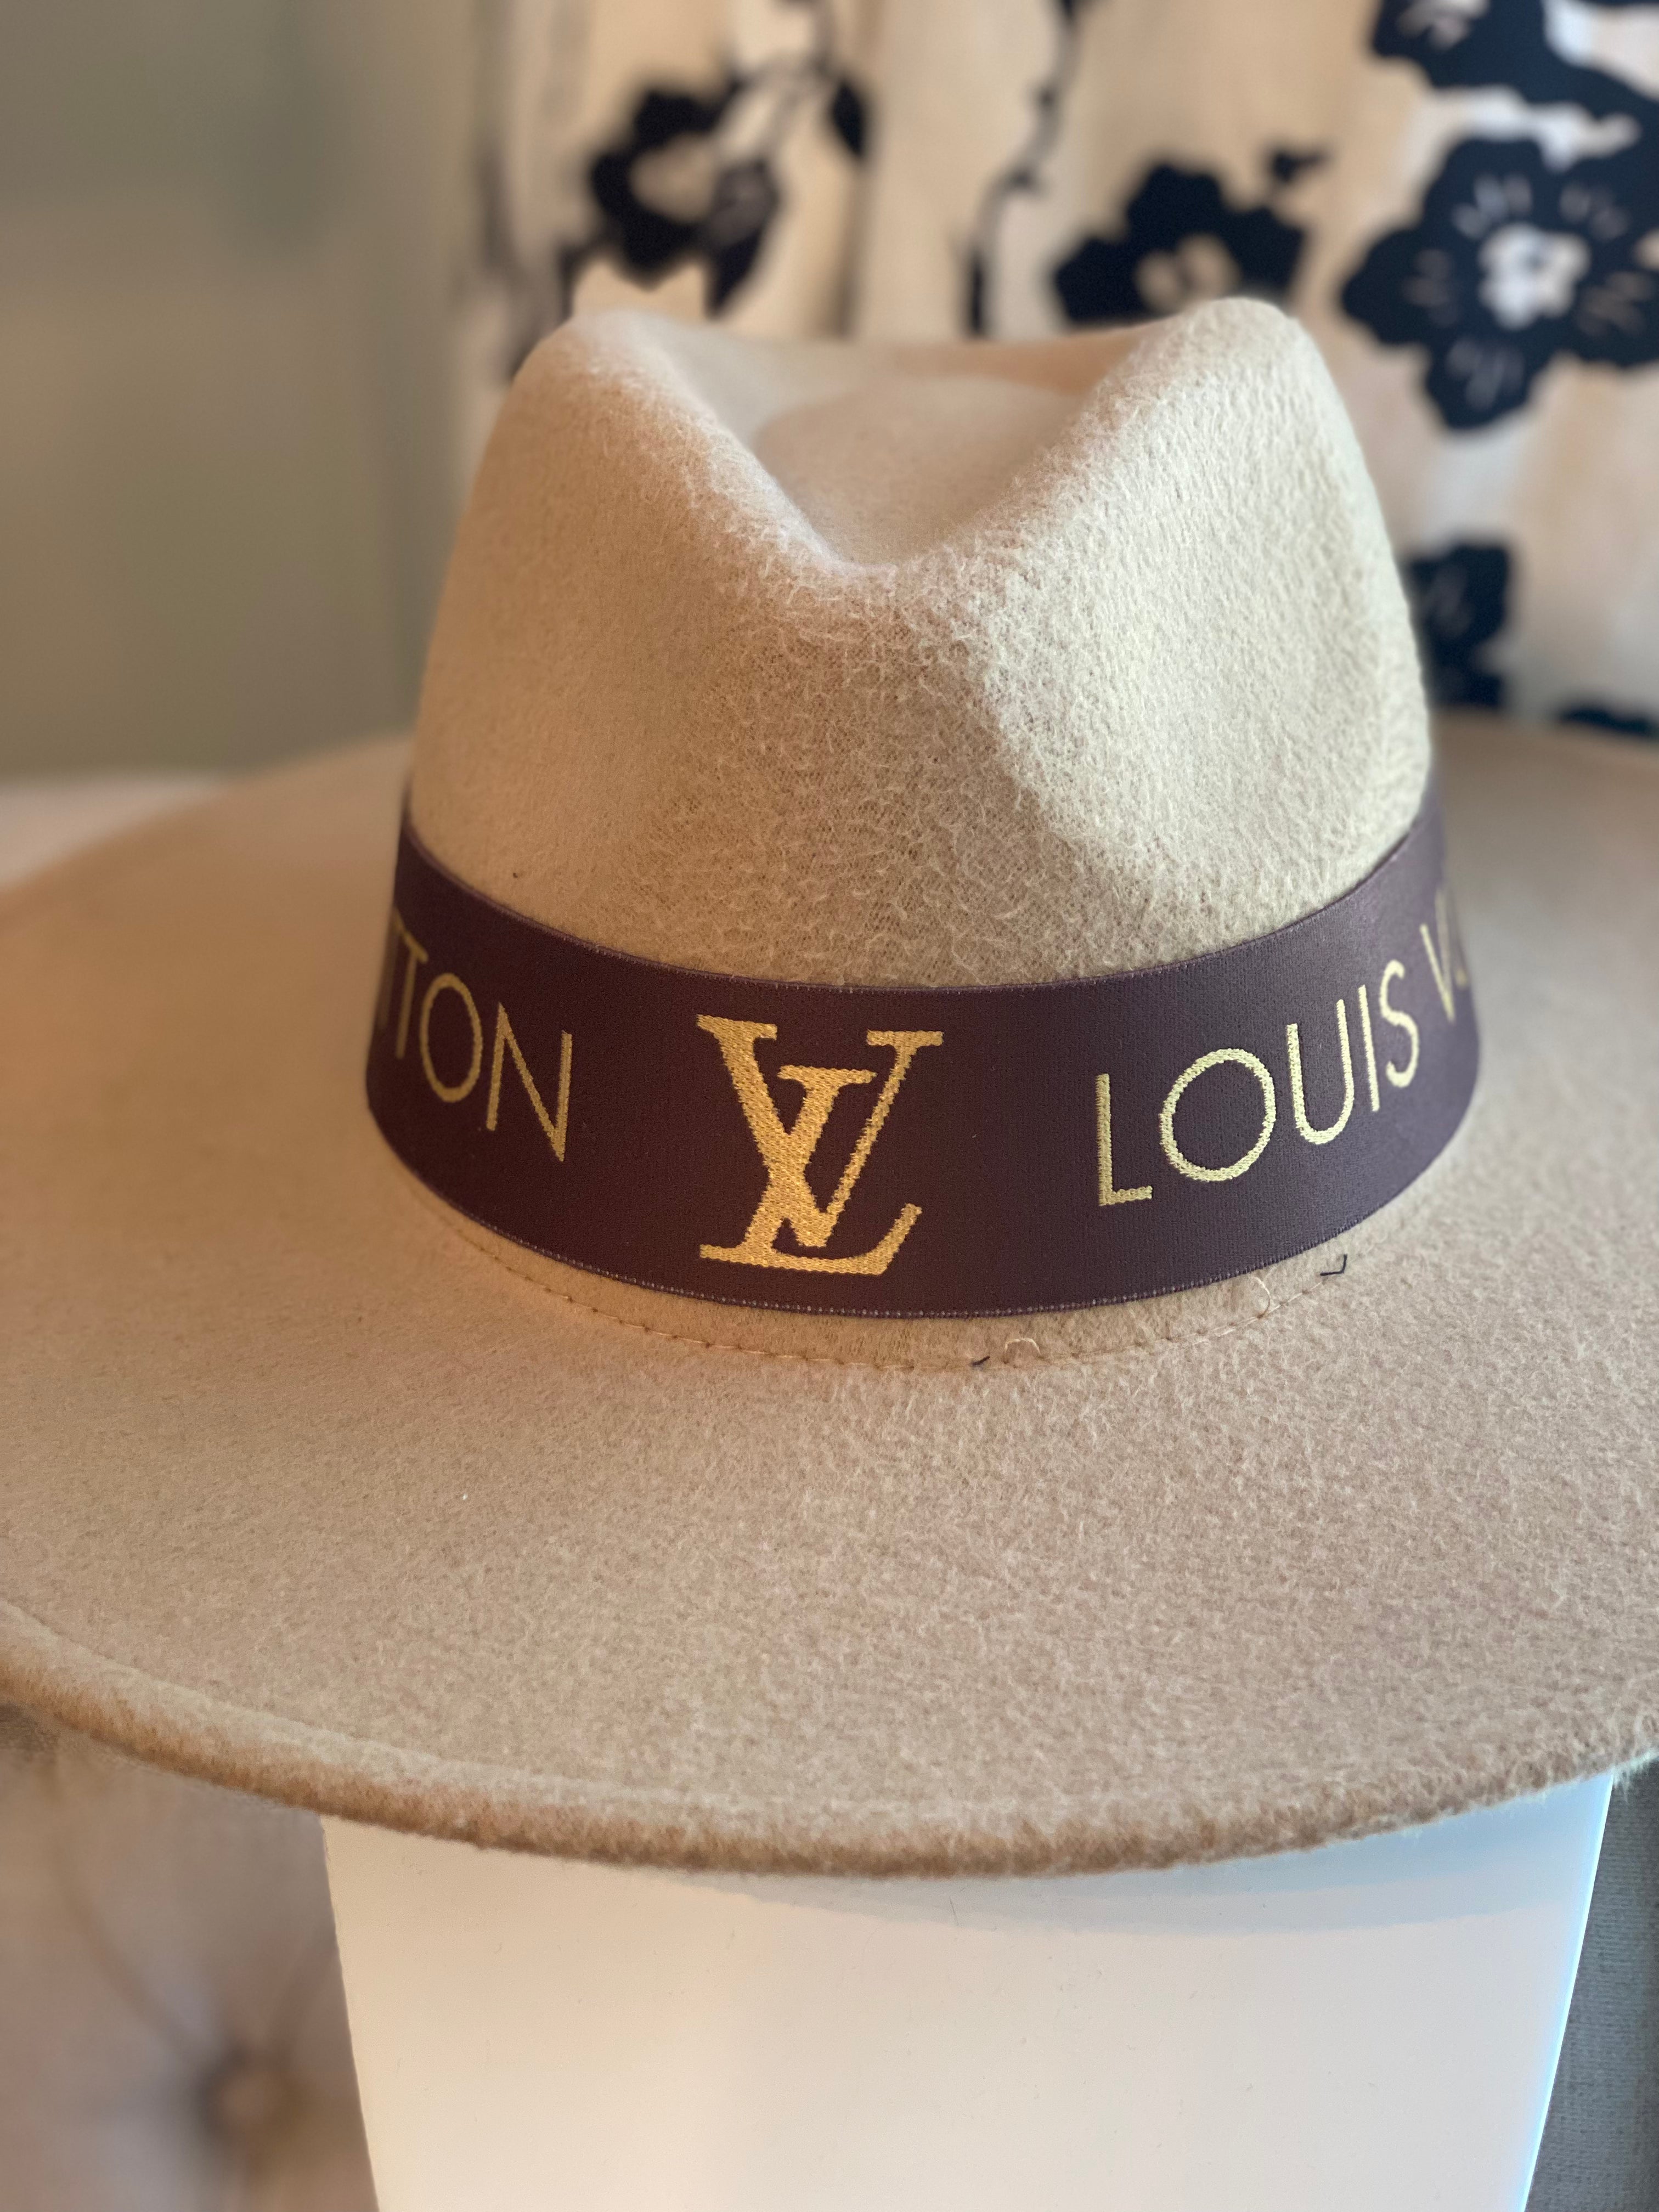 LV Pattern Hat Bands